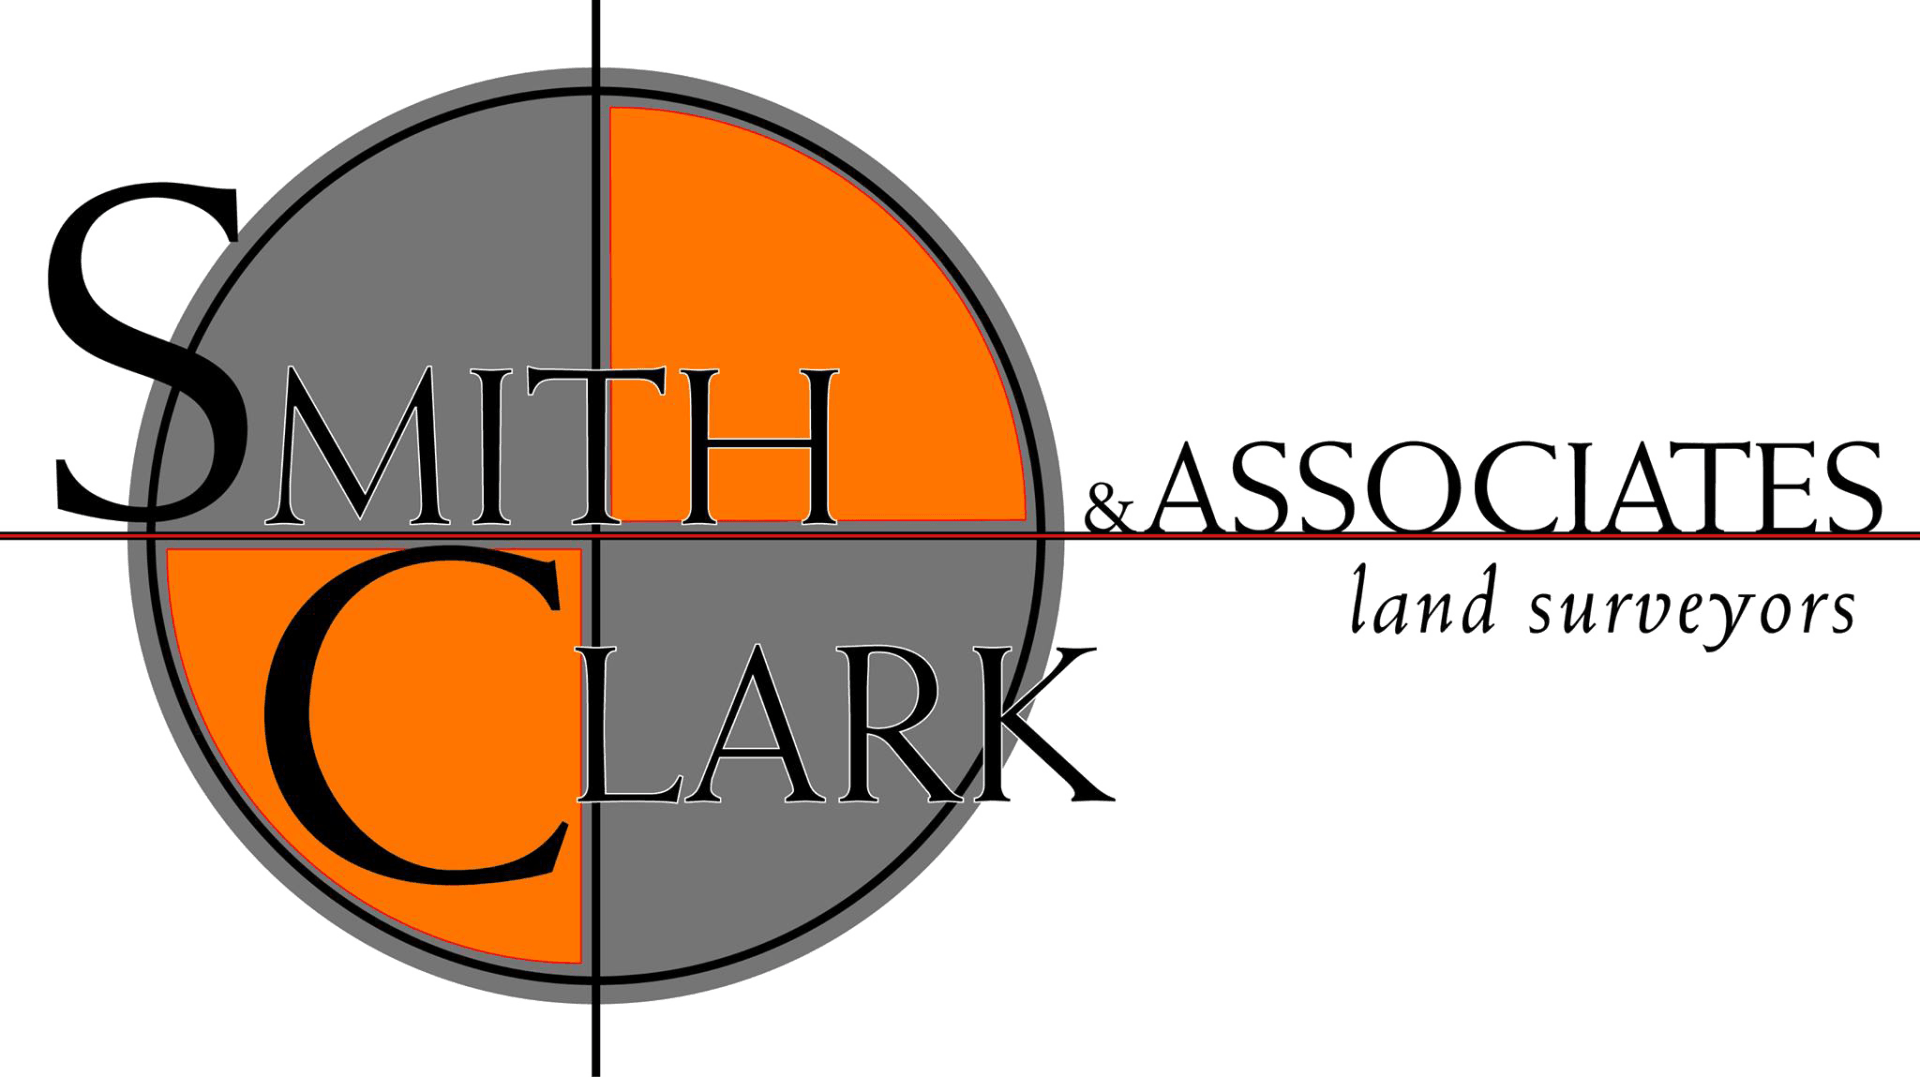 Smith, Clark & Associates